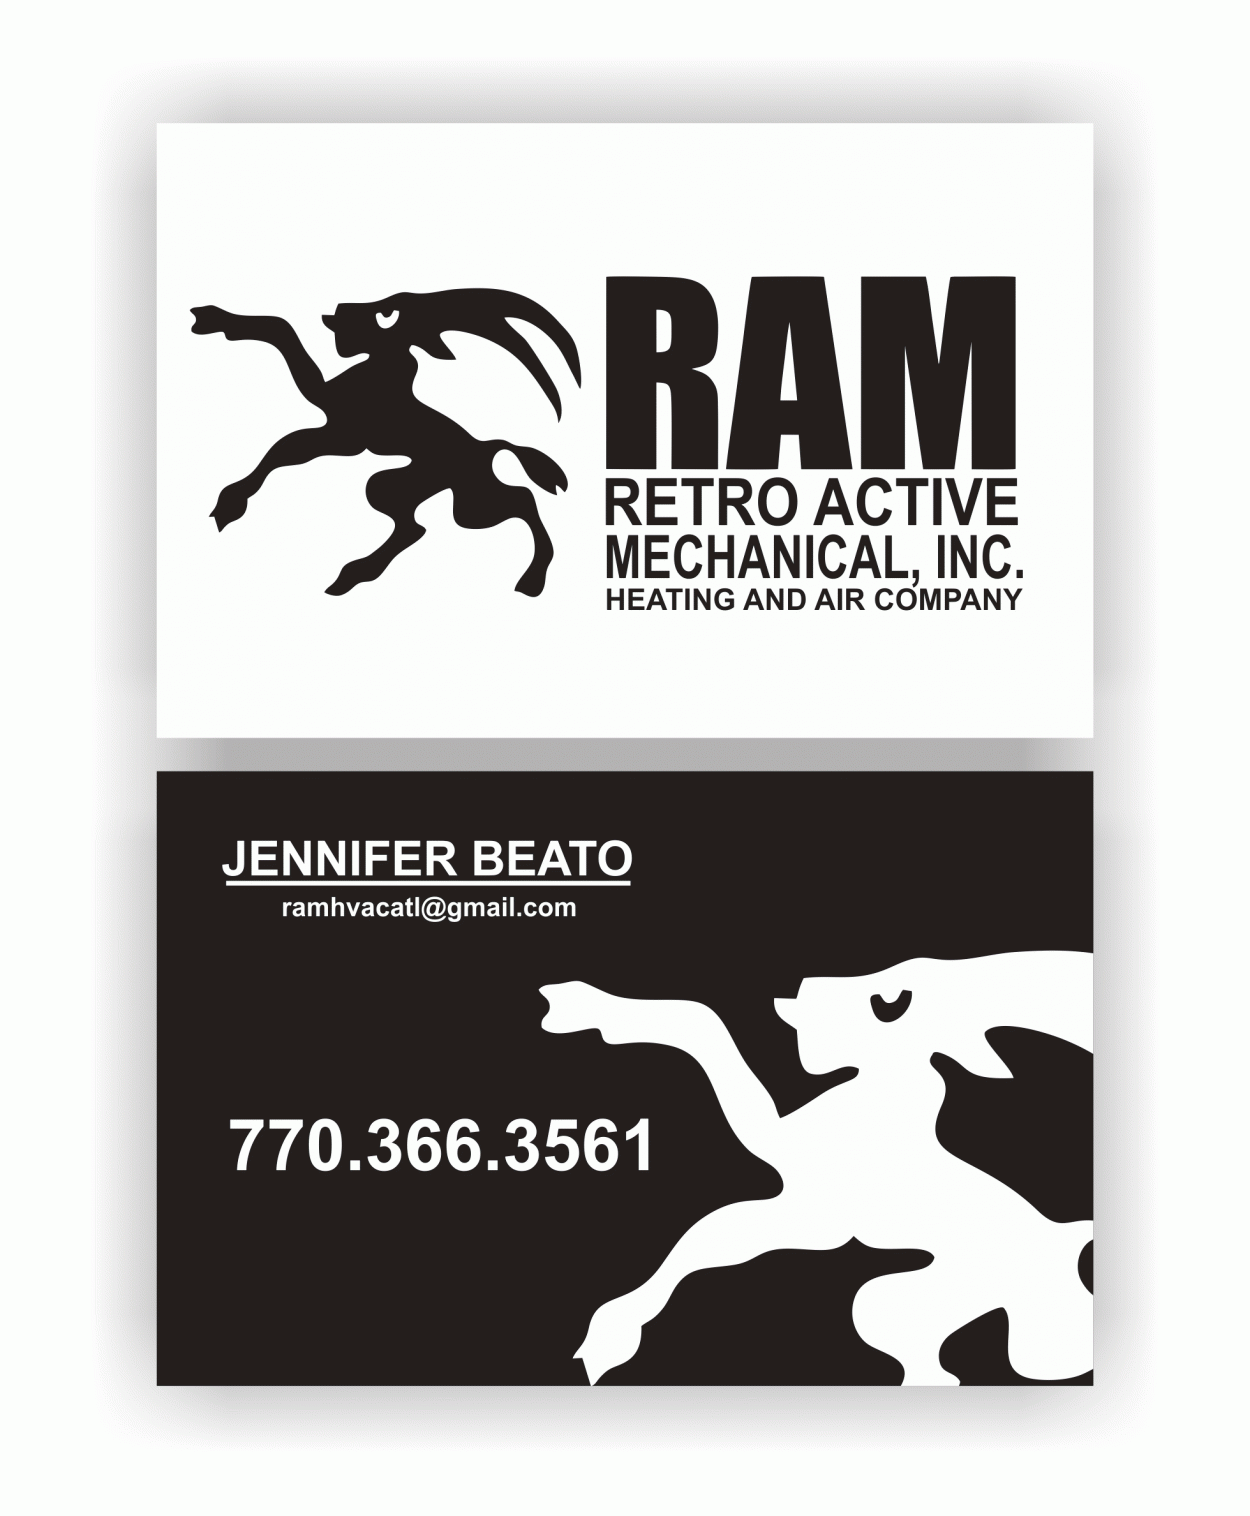 Business Card & Stationery Design entry 366415 submitted by maryanto to the Business Card & Stationery Design for Retro-Active Mechanical, Inc. (RAM) run by ramatlanta